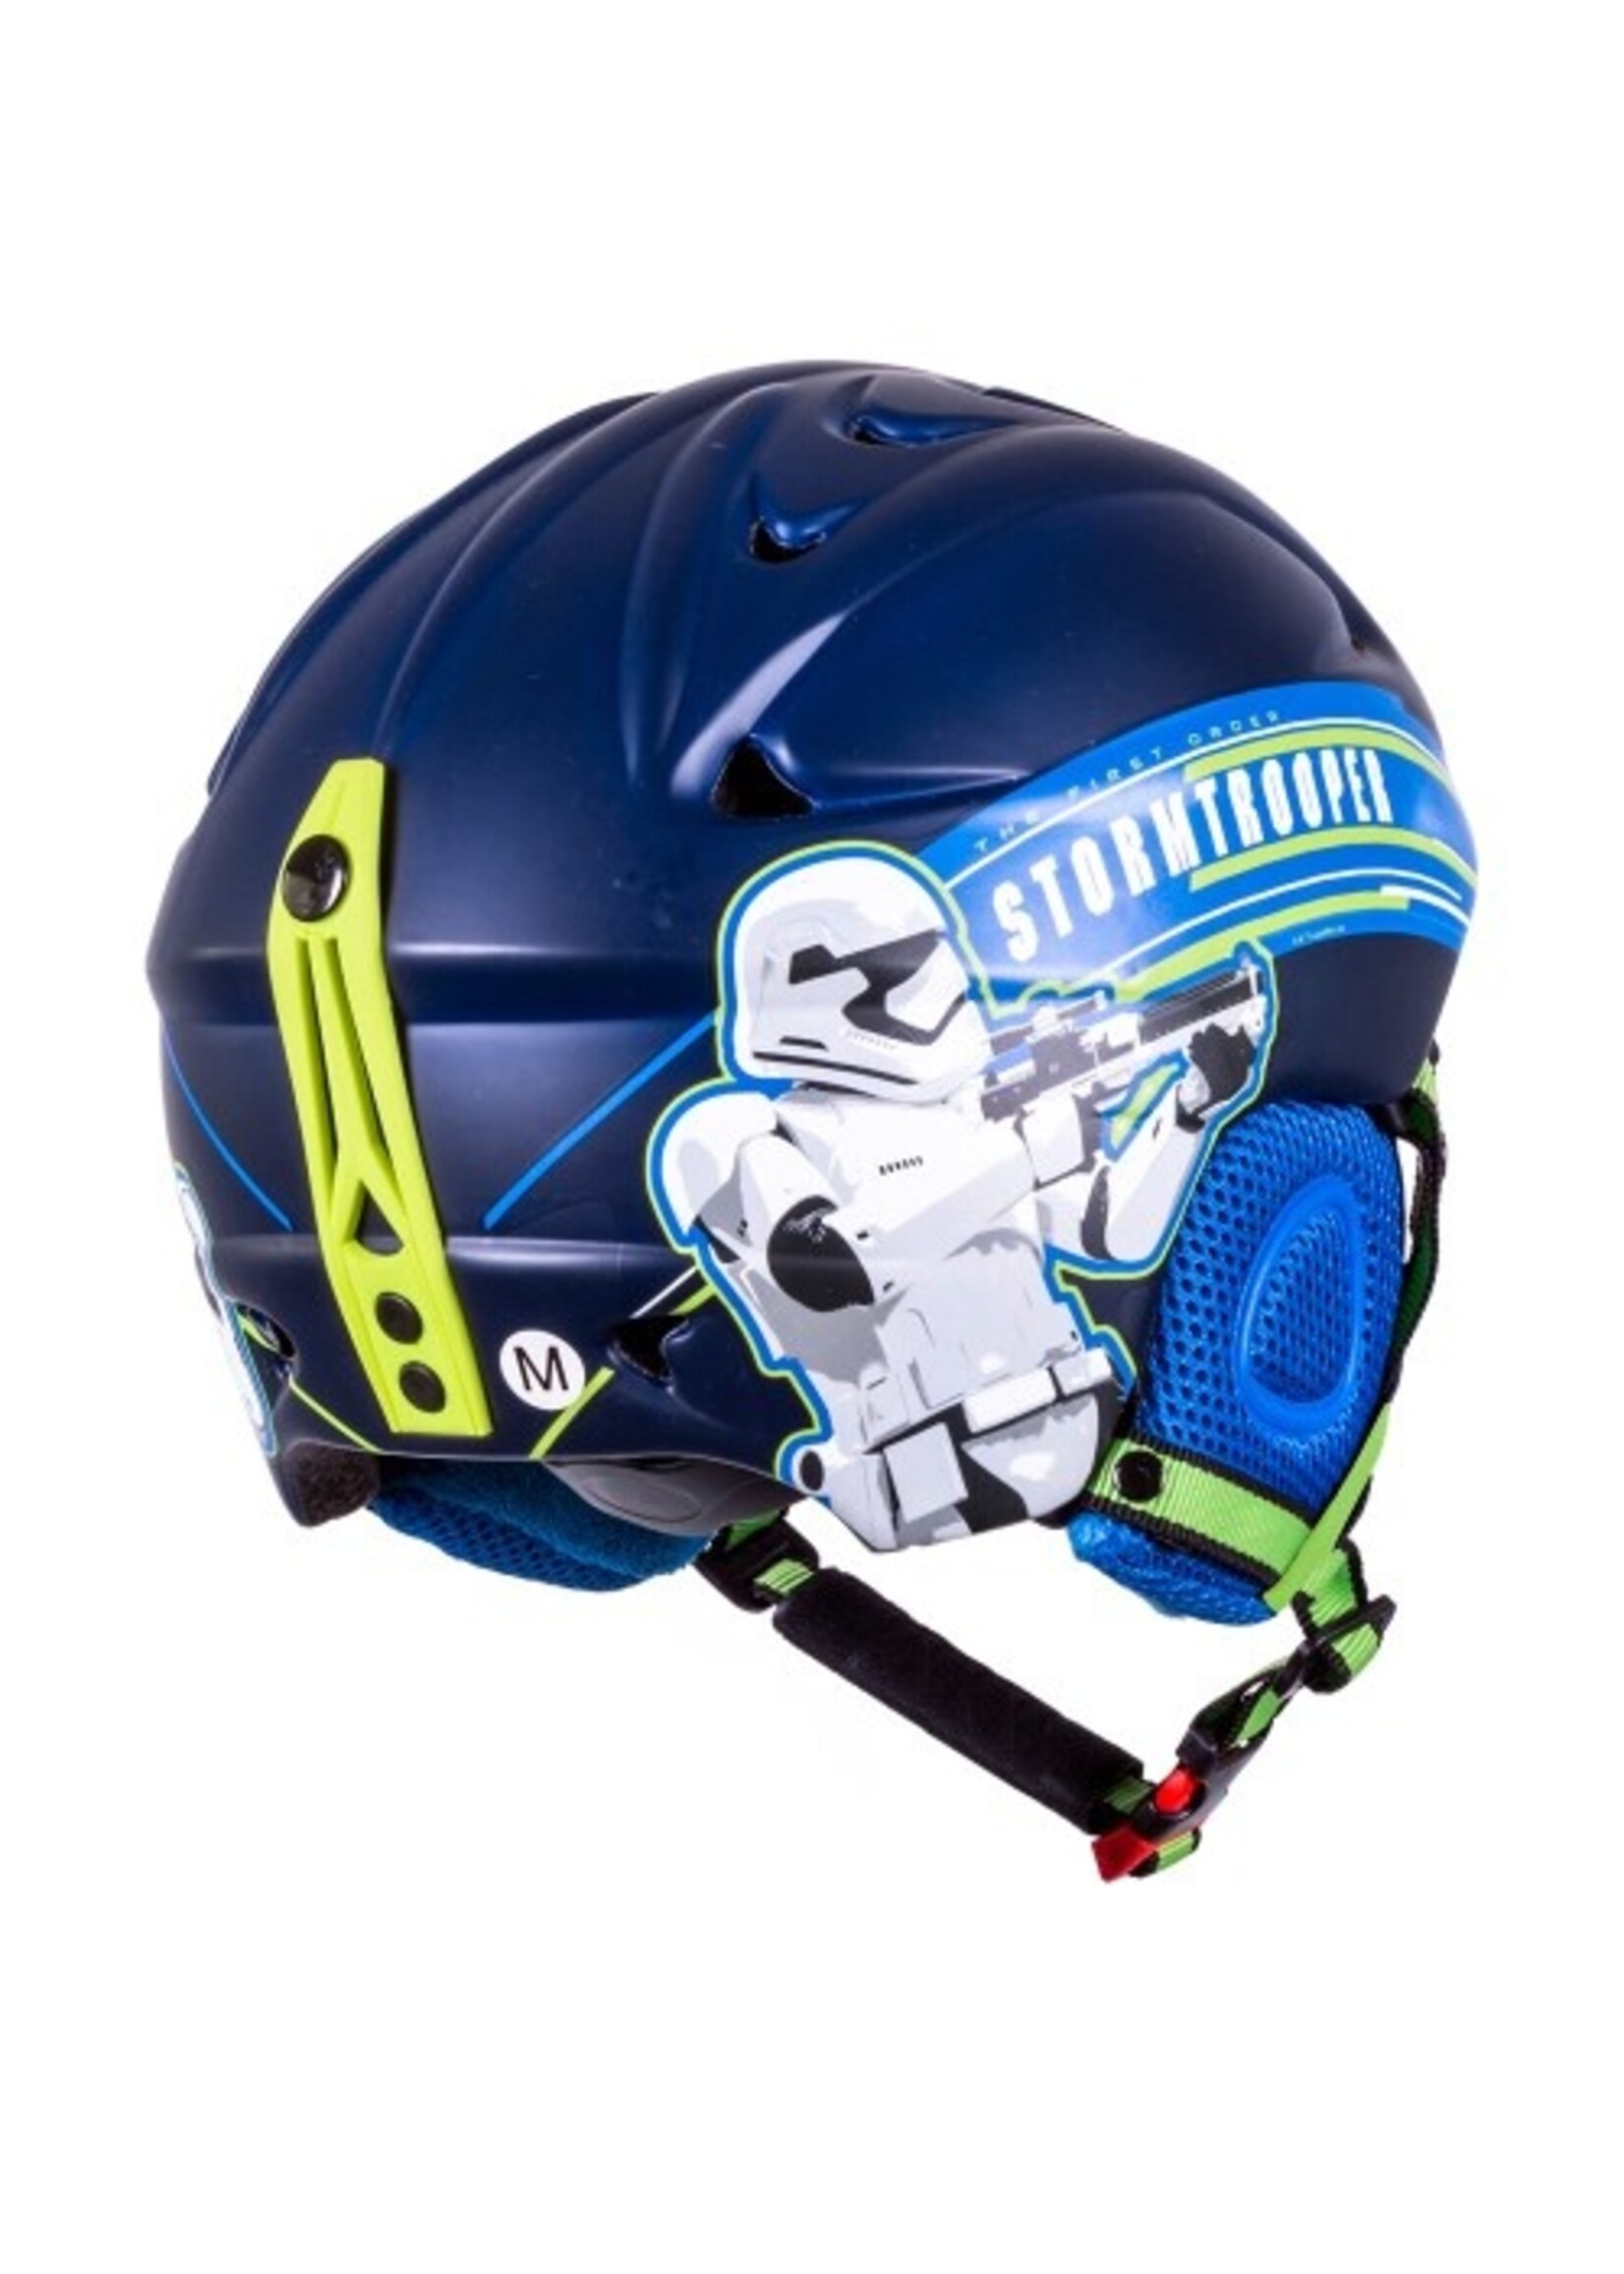 Disney Star Wars ski helmet from Disney navy blue